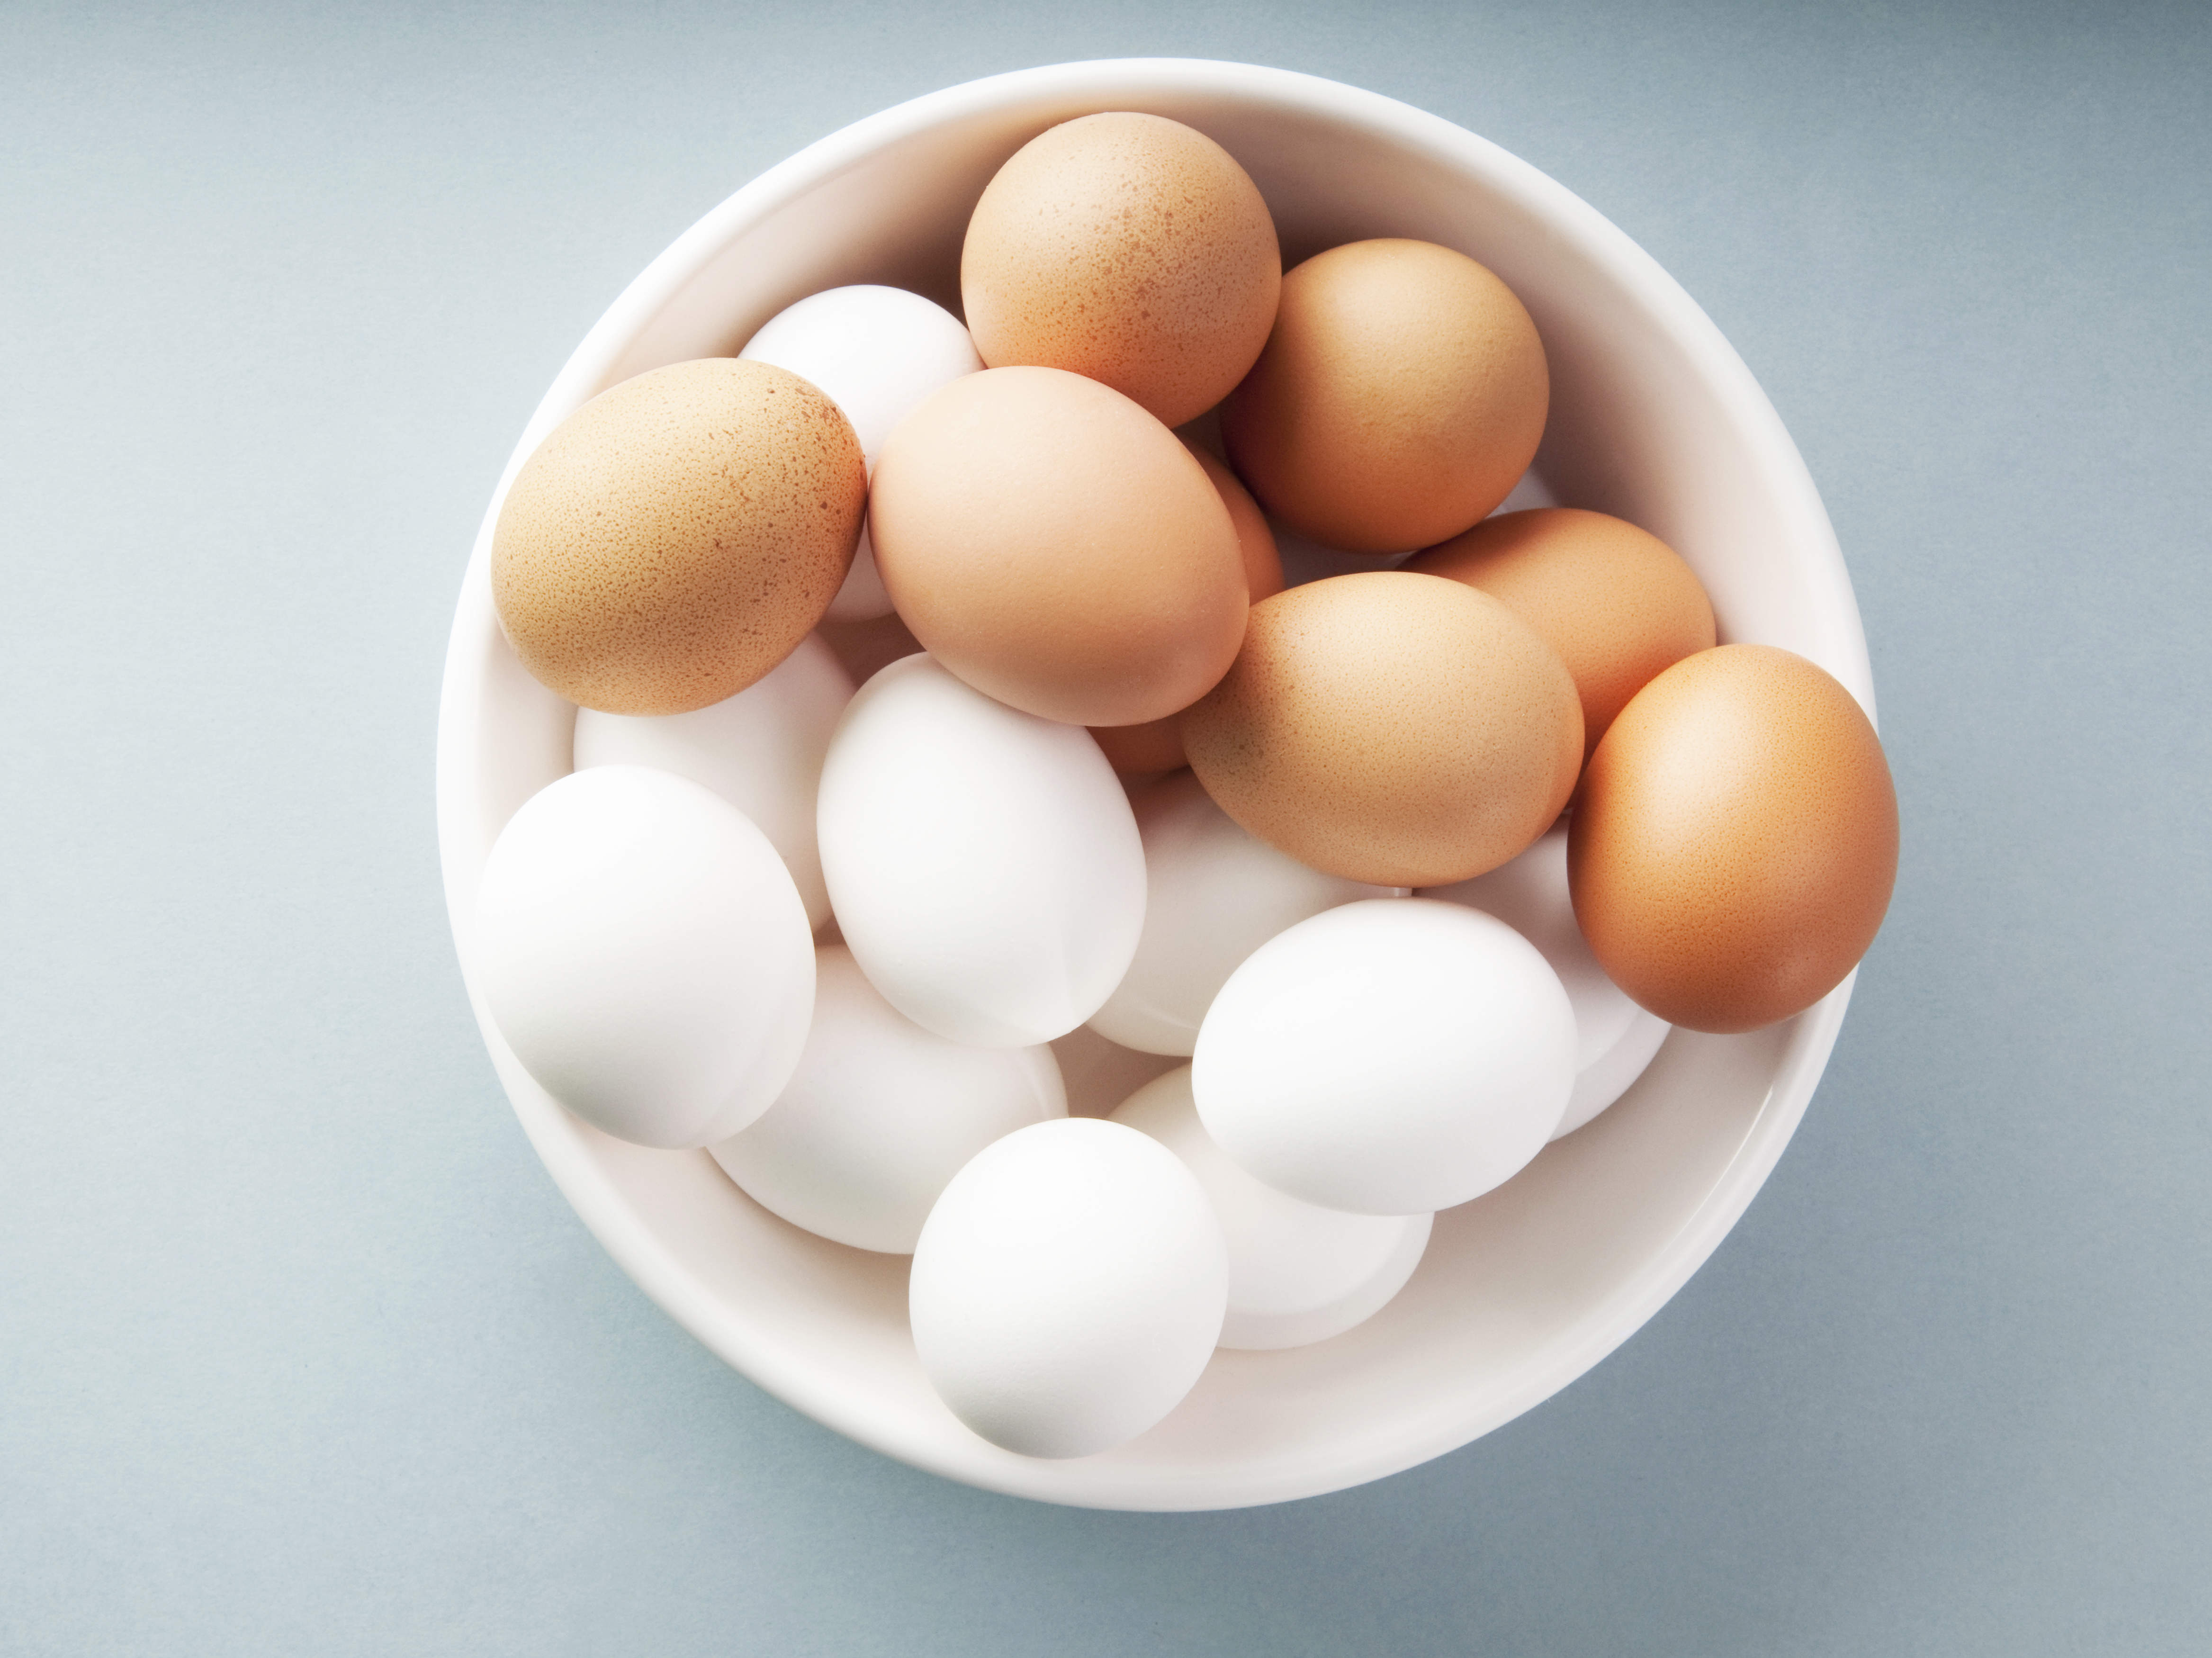 Are Eggs Actually Healthy? - Health